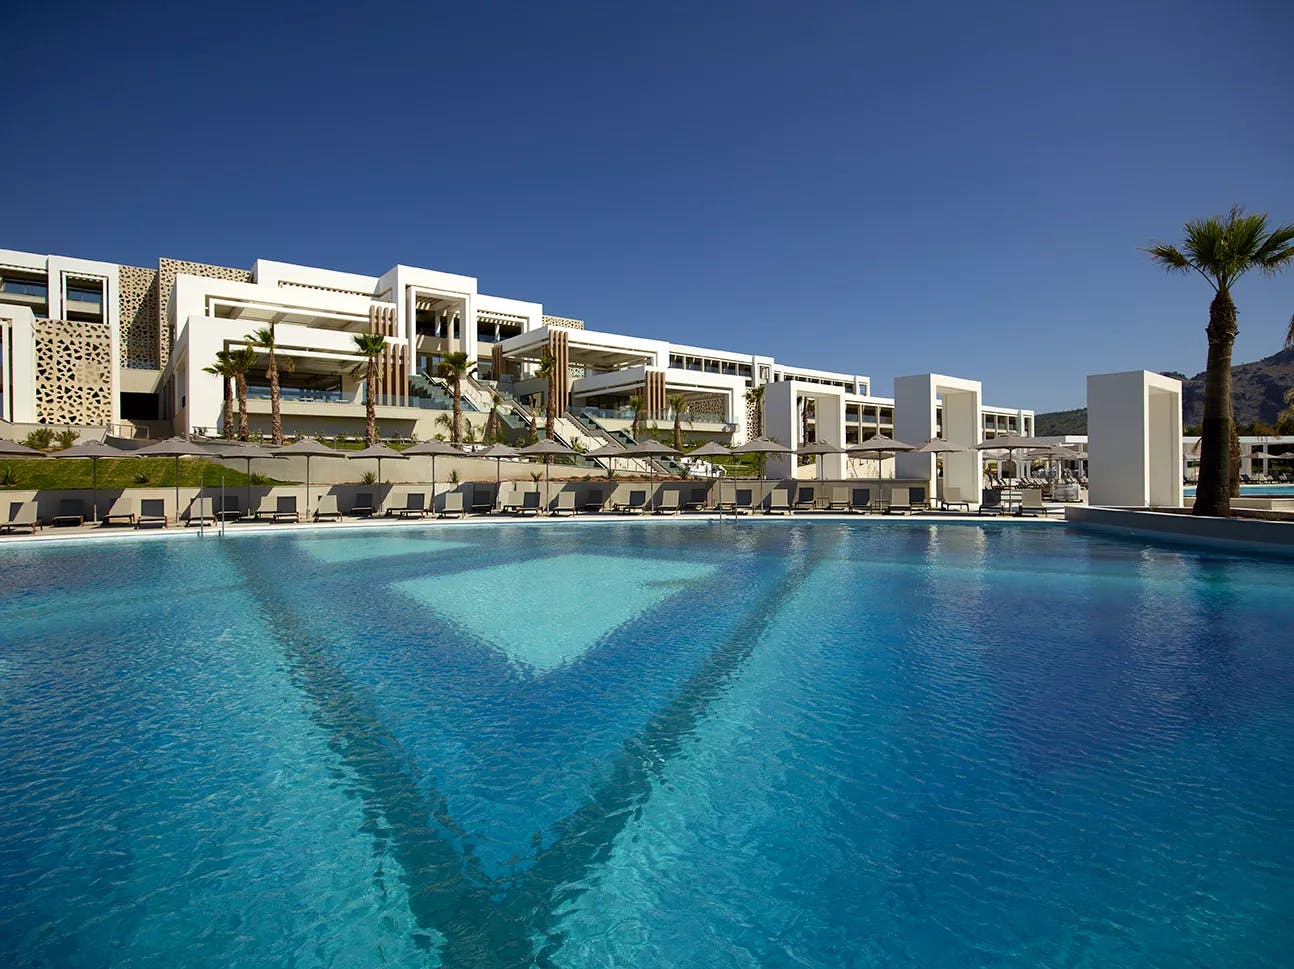 Resort overlooking a pool 